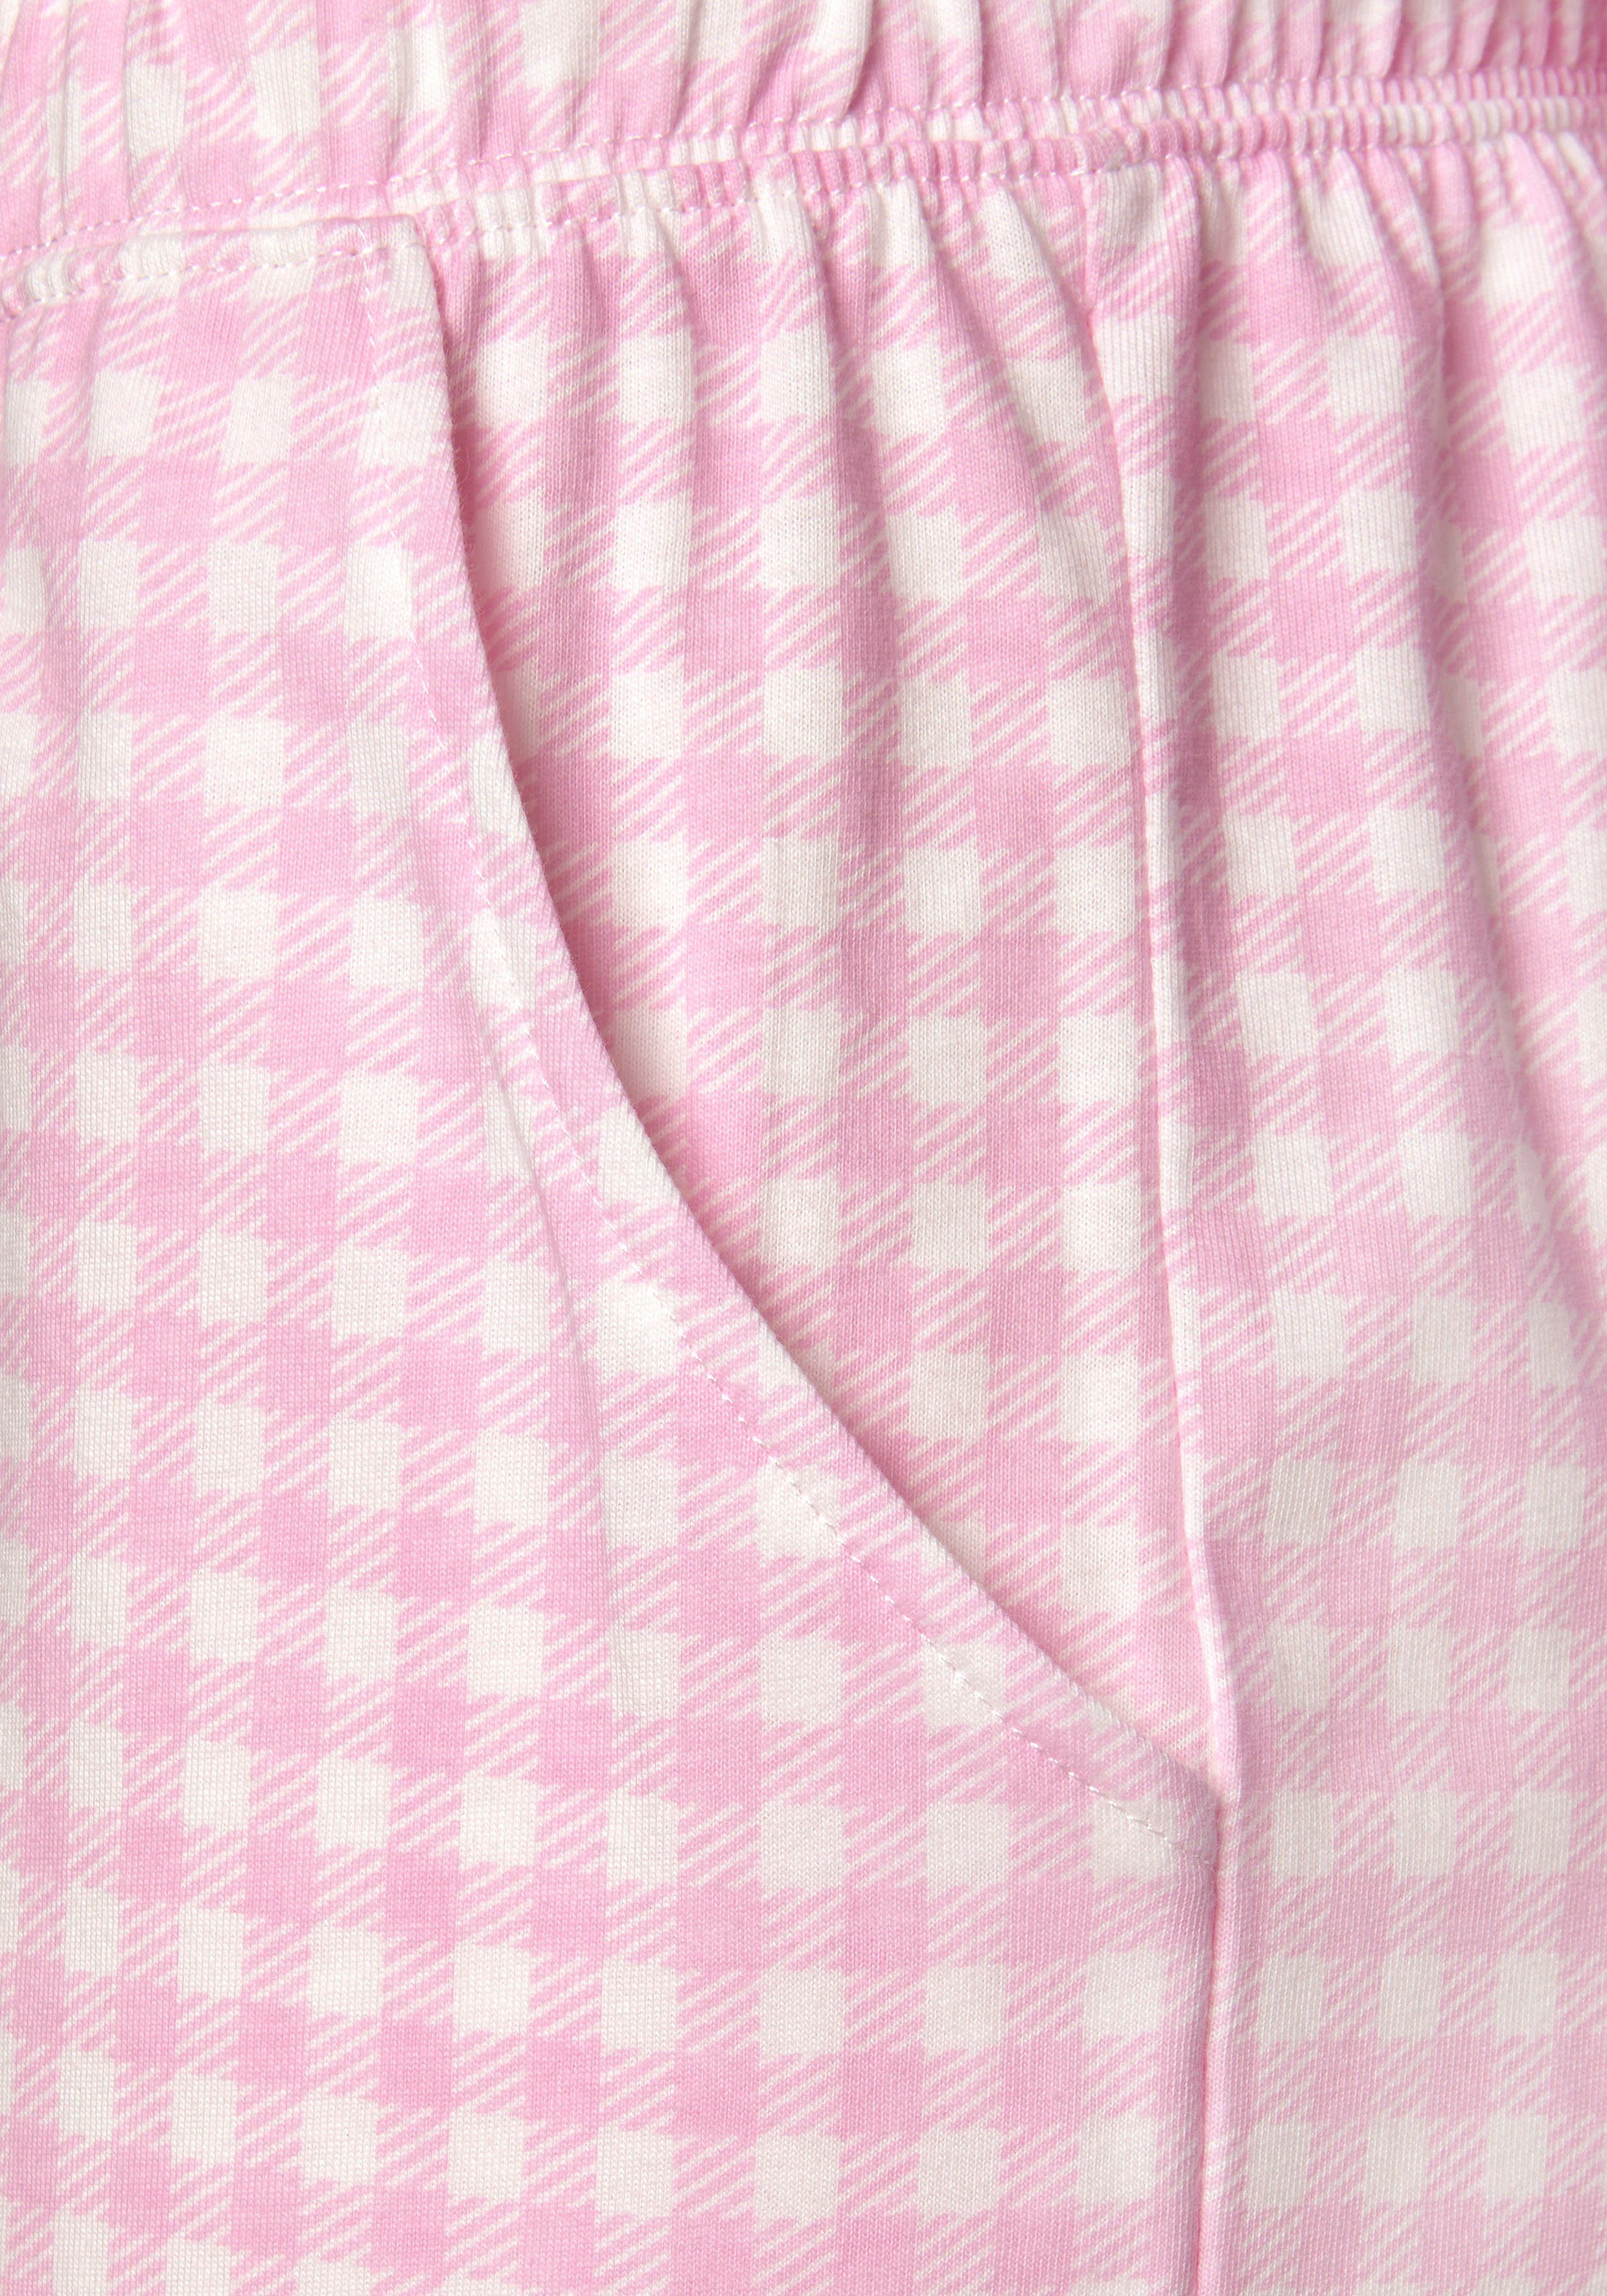 s.Oliver Pyjama tlg., 1 (2 rosa-kariert Stück)